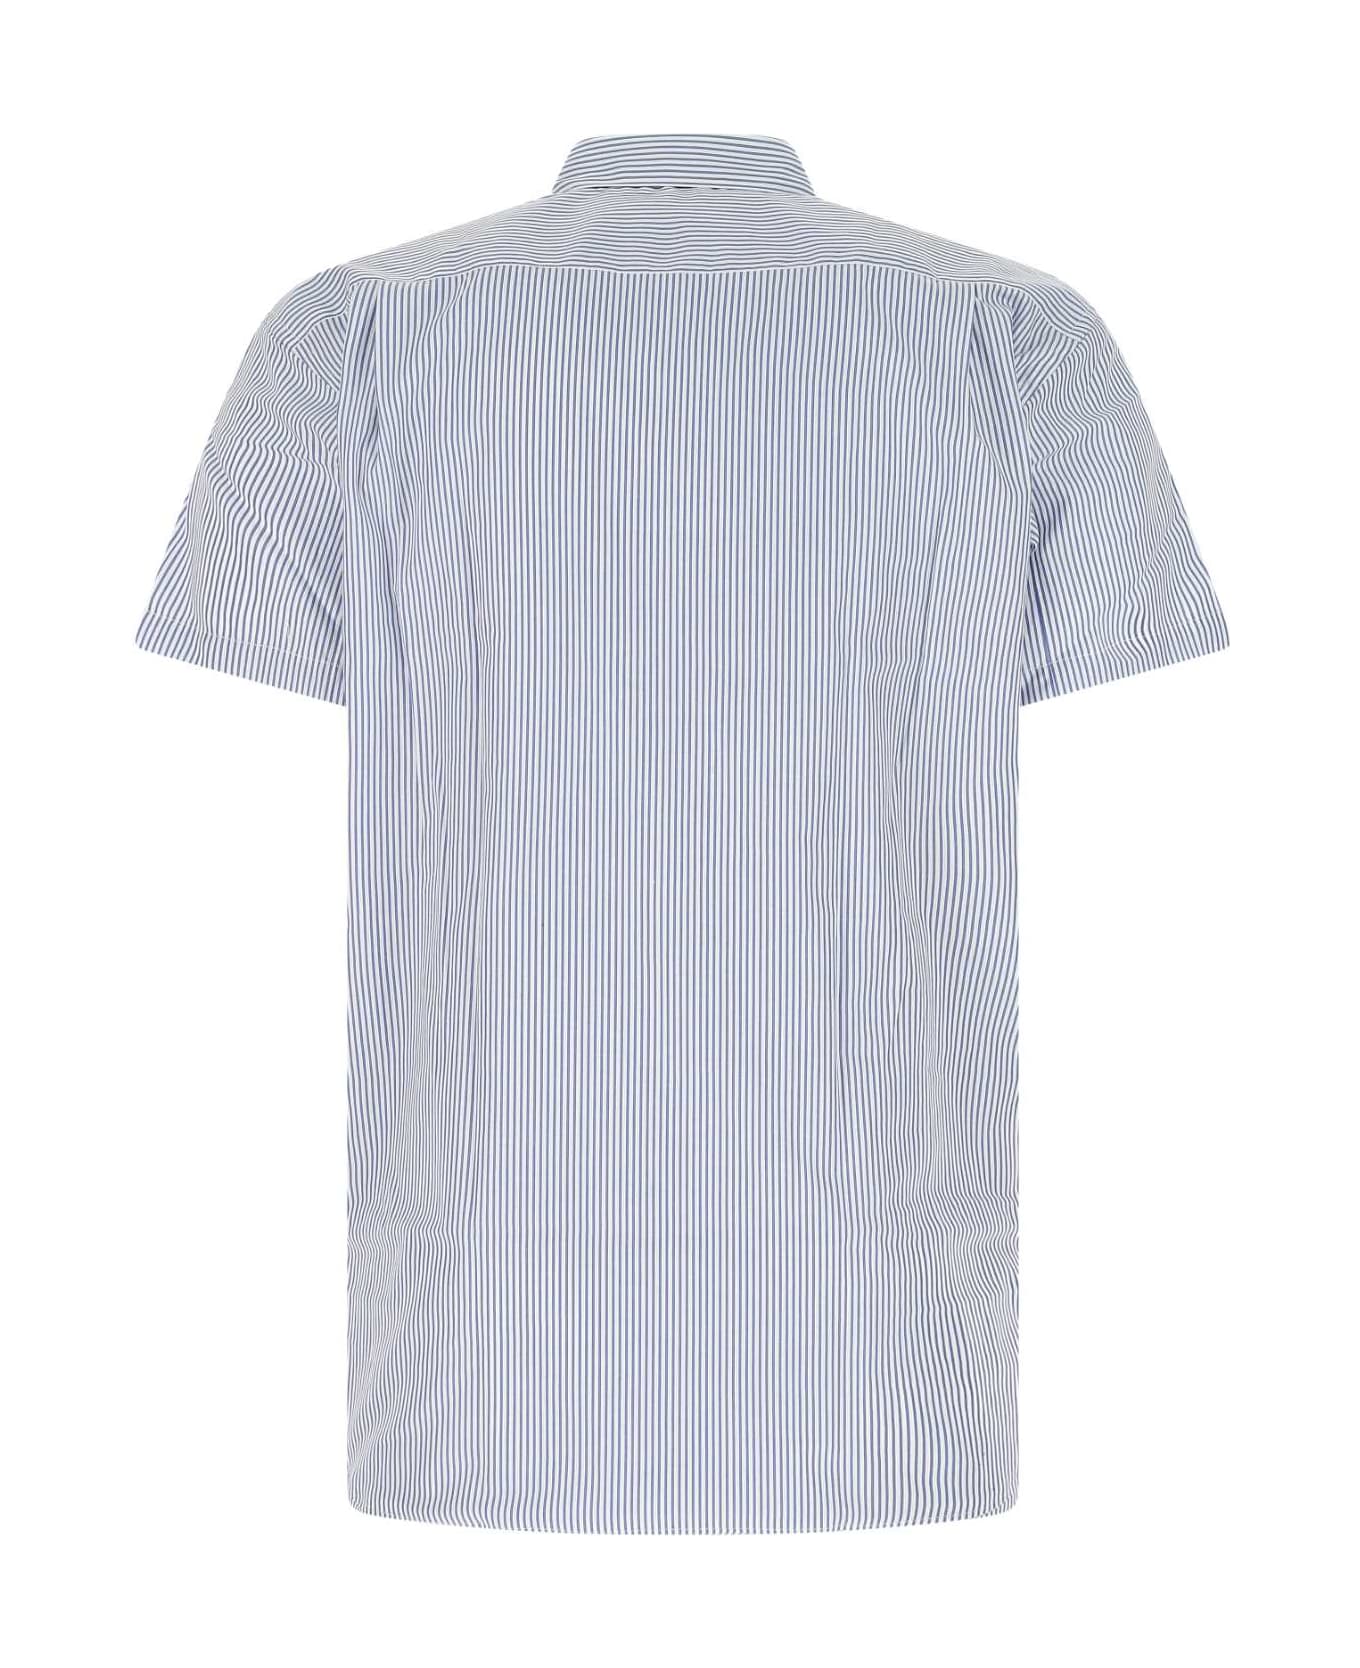 Comme des Garçons Shirt Embroidered Cotton Shirt - BLUESTRIPES